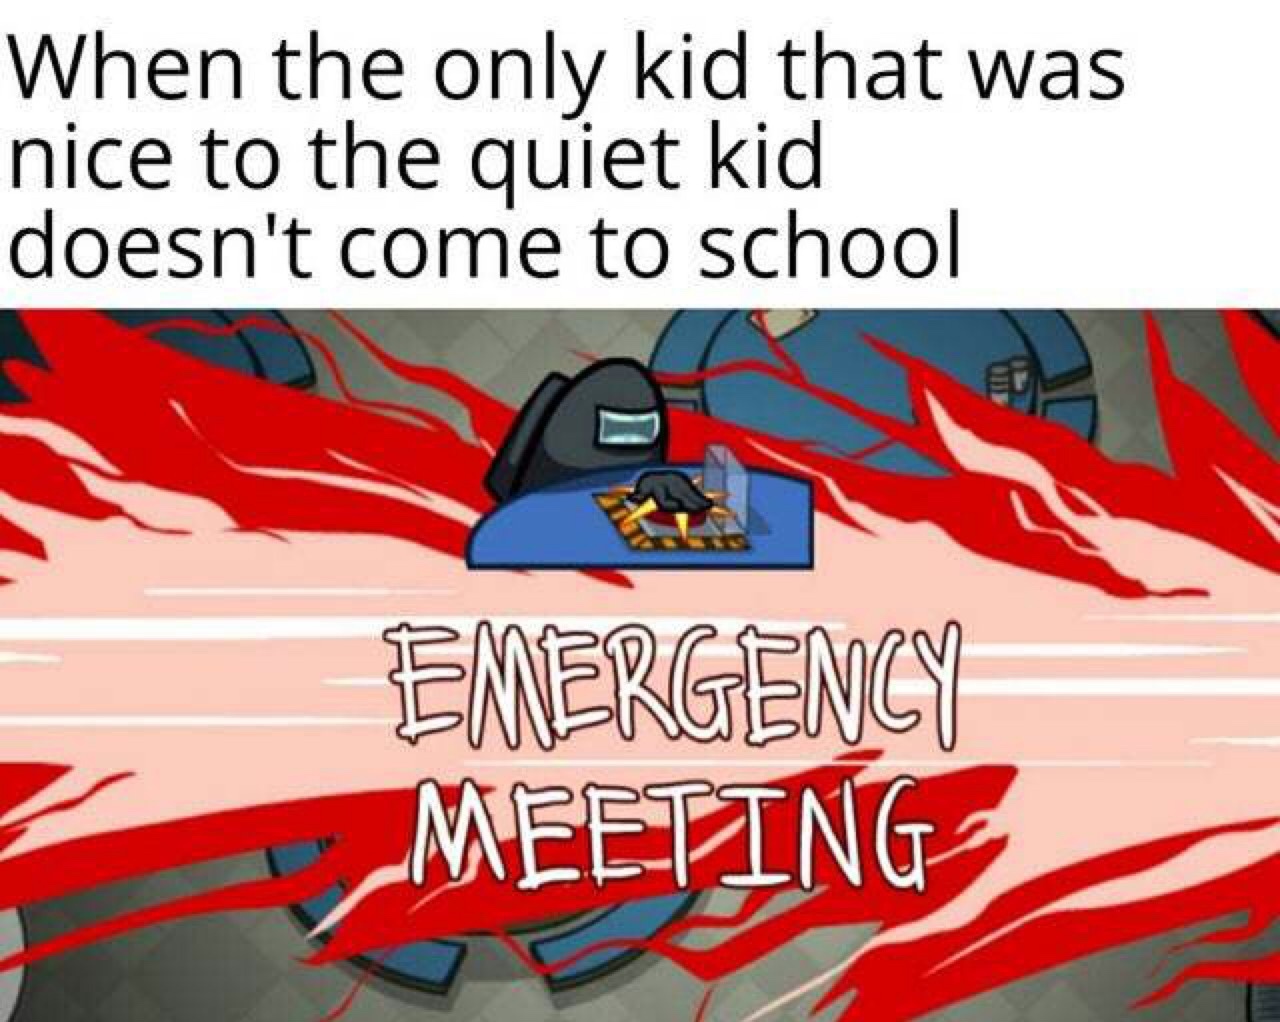 school shooter - meme